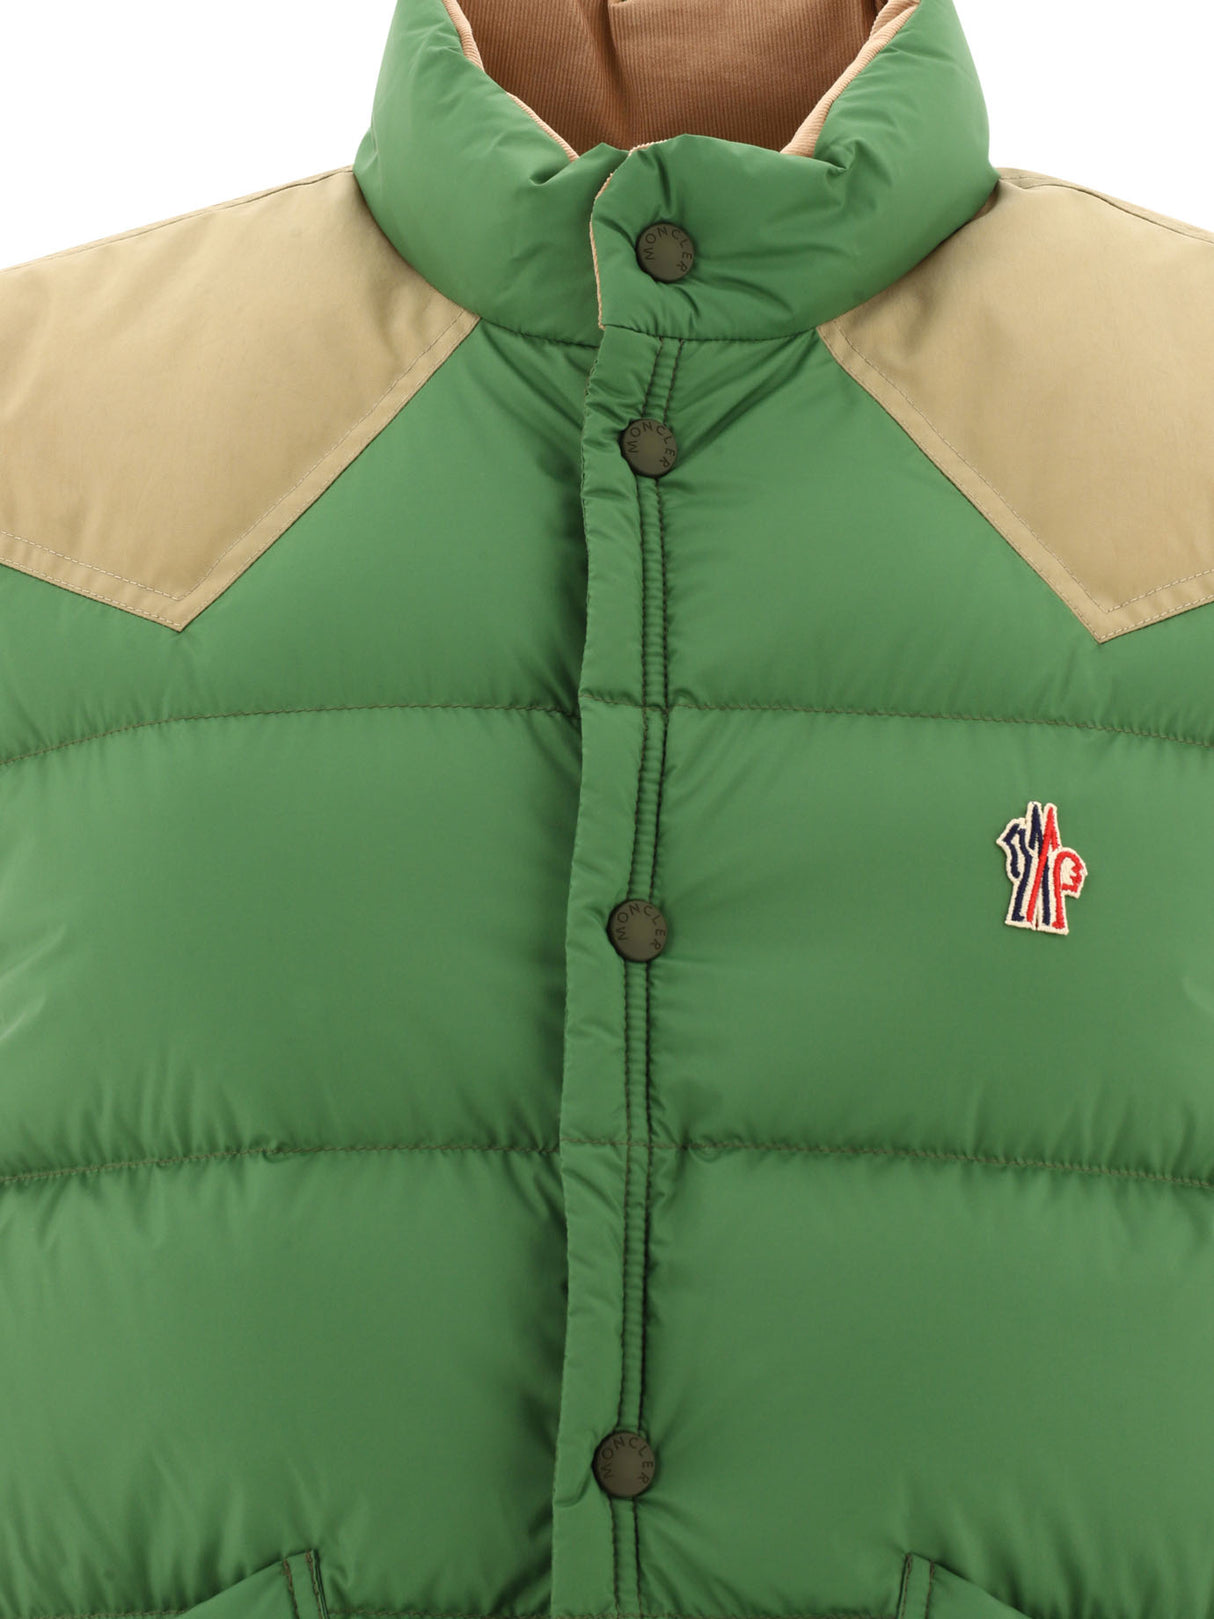 MONCLER GRENOBLE Green Vest Jacket for Men - Regular Fit with Button Closure and Side Pockets